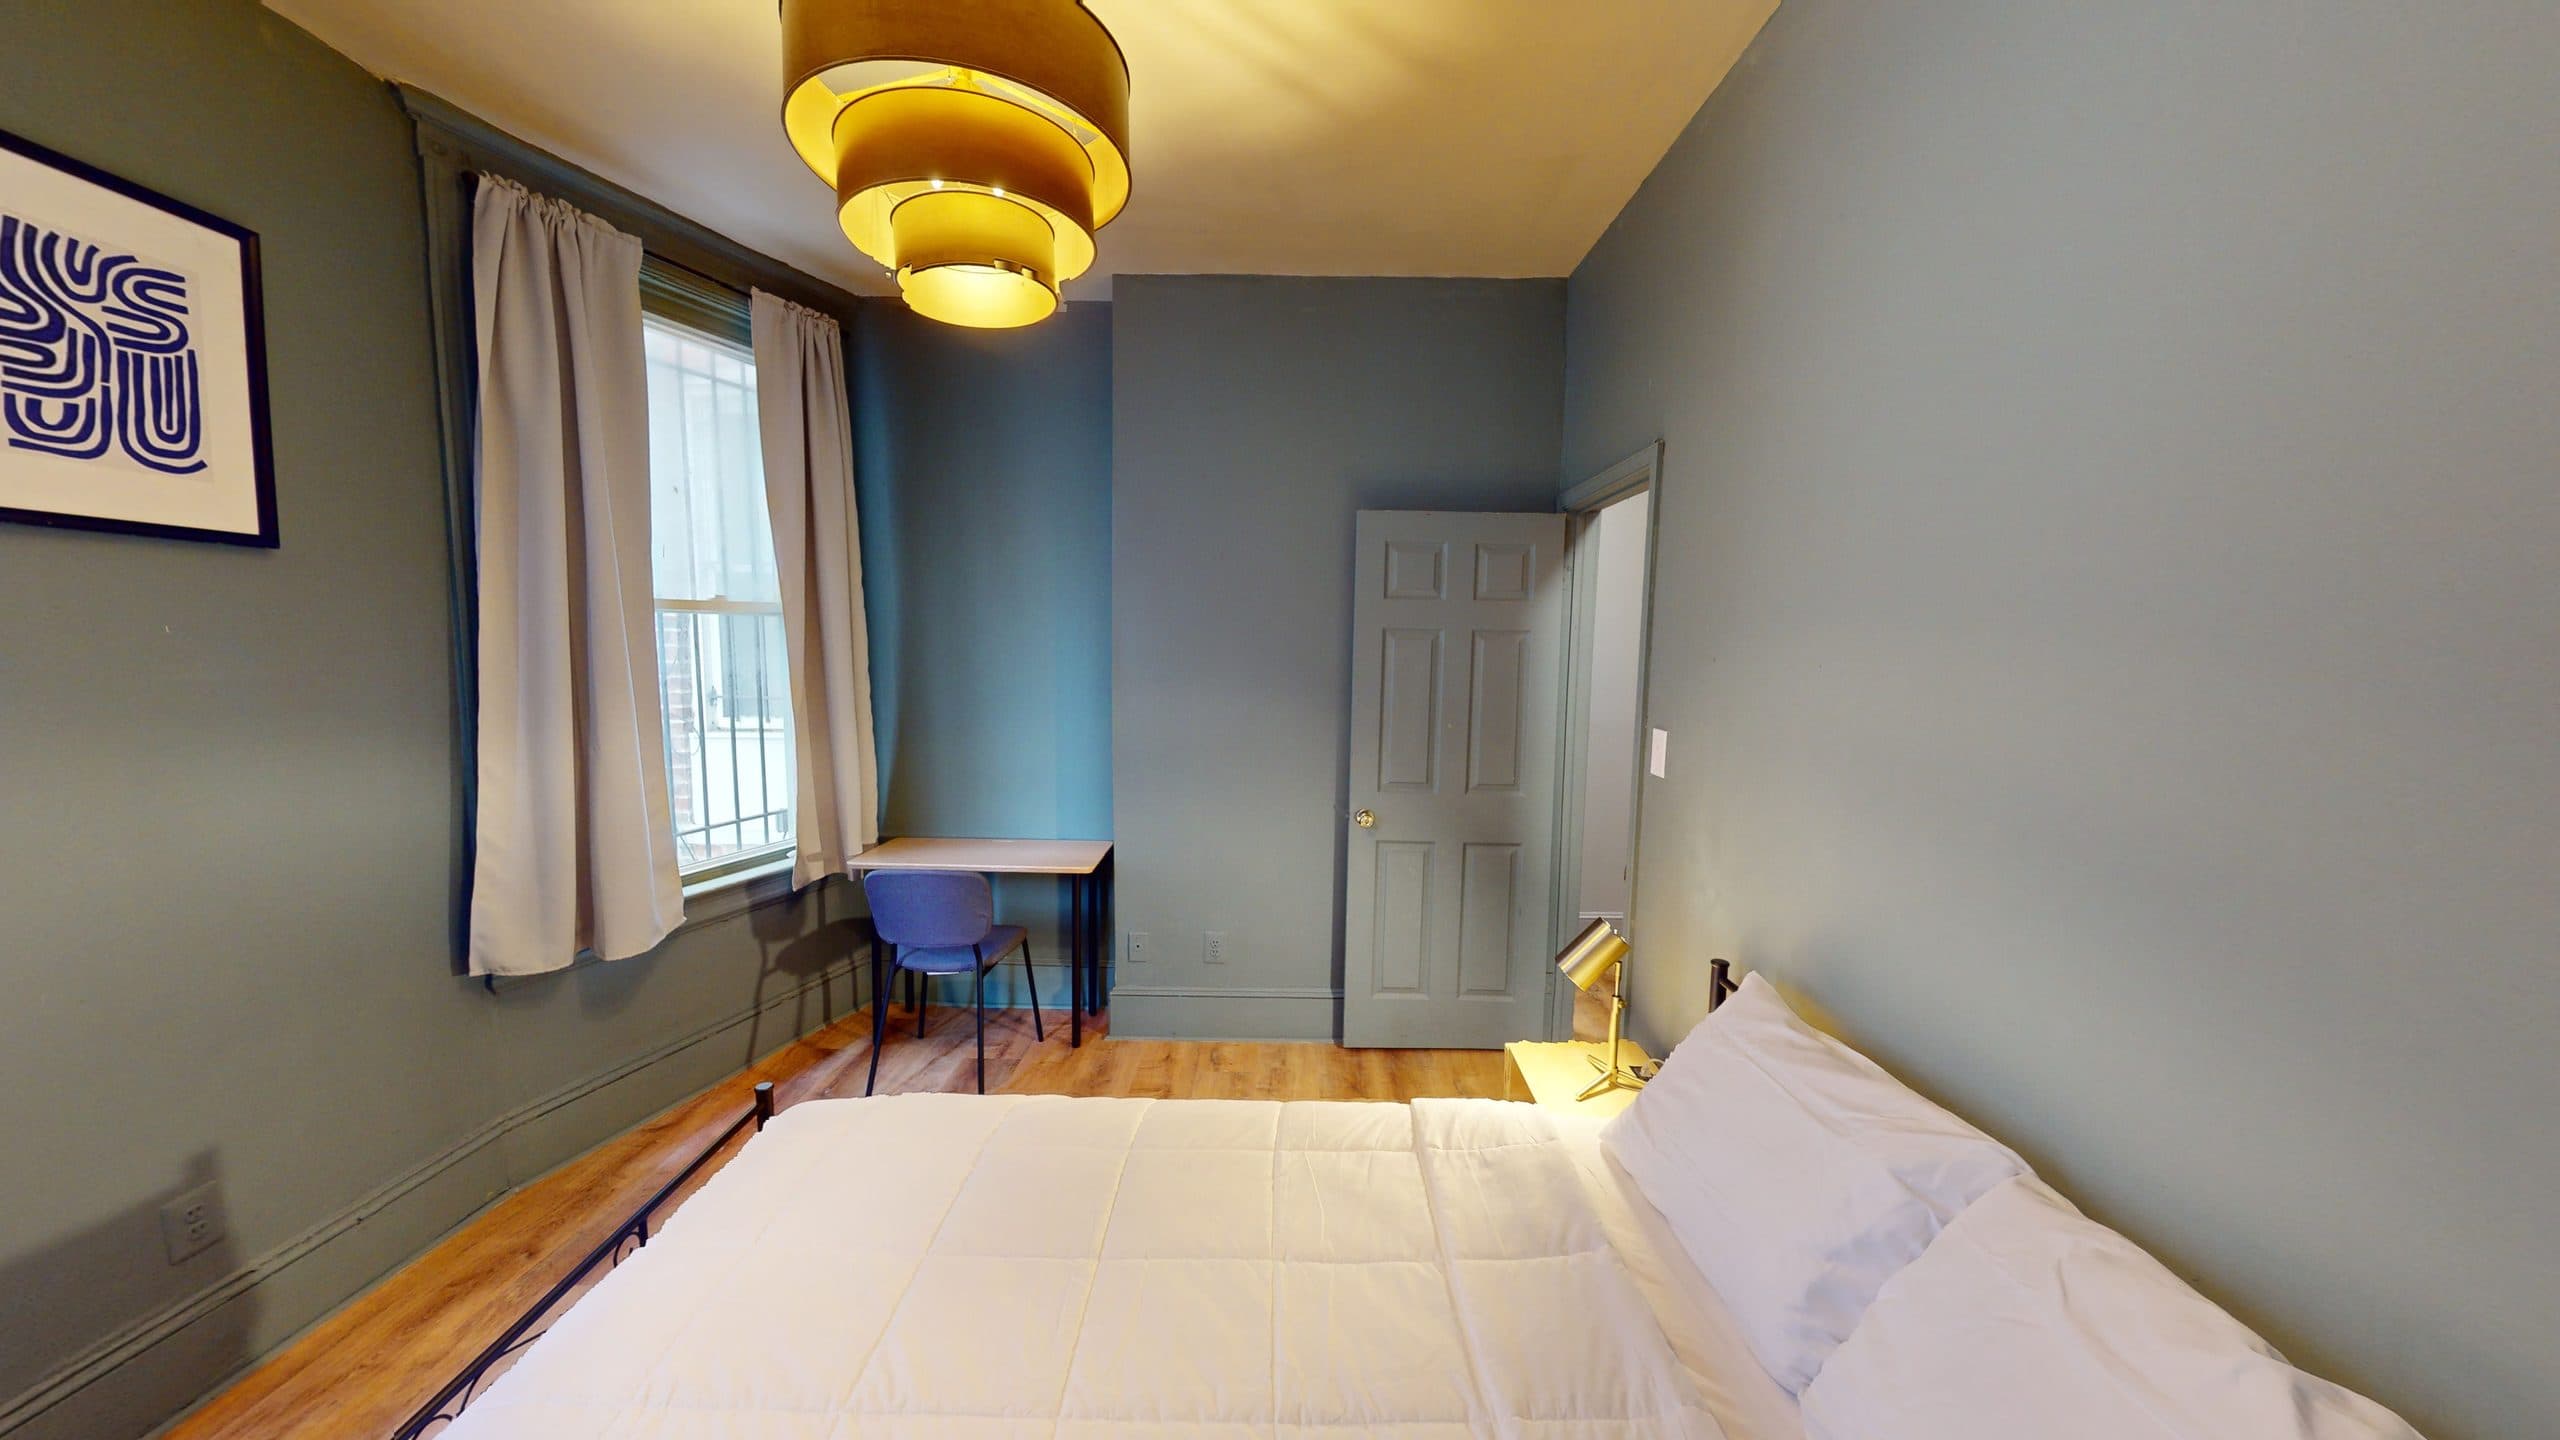 Photo 17 of #851: Full Bedroom B at June Homes